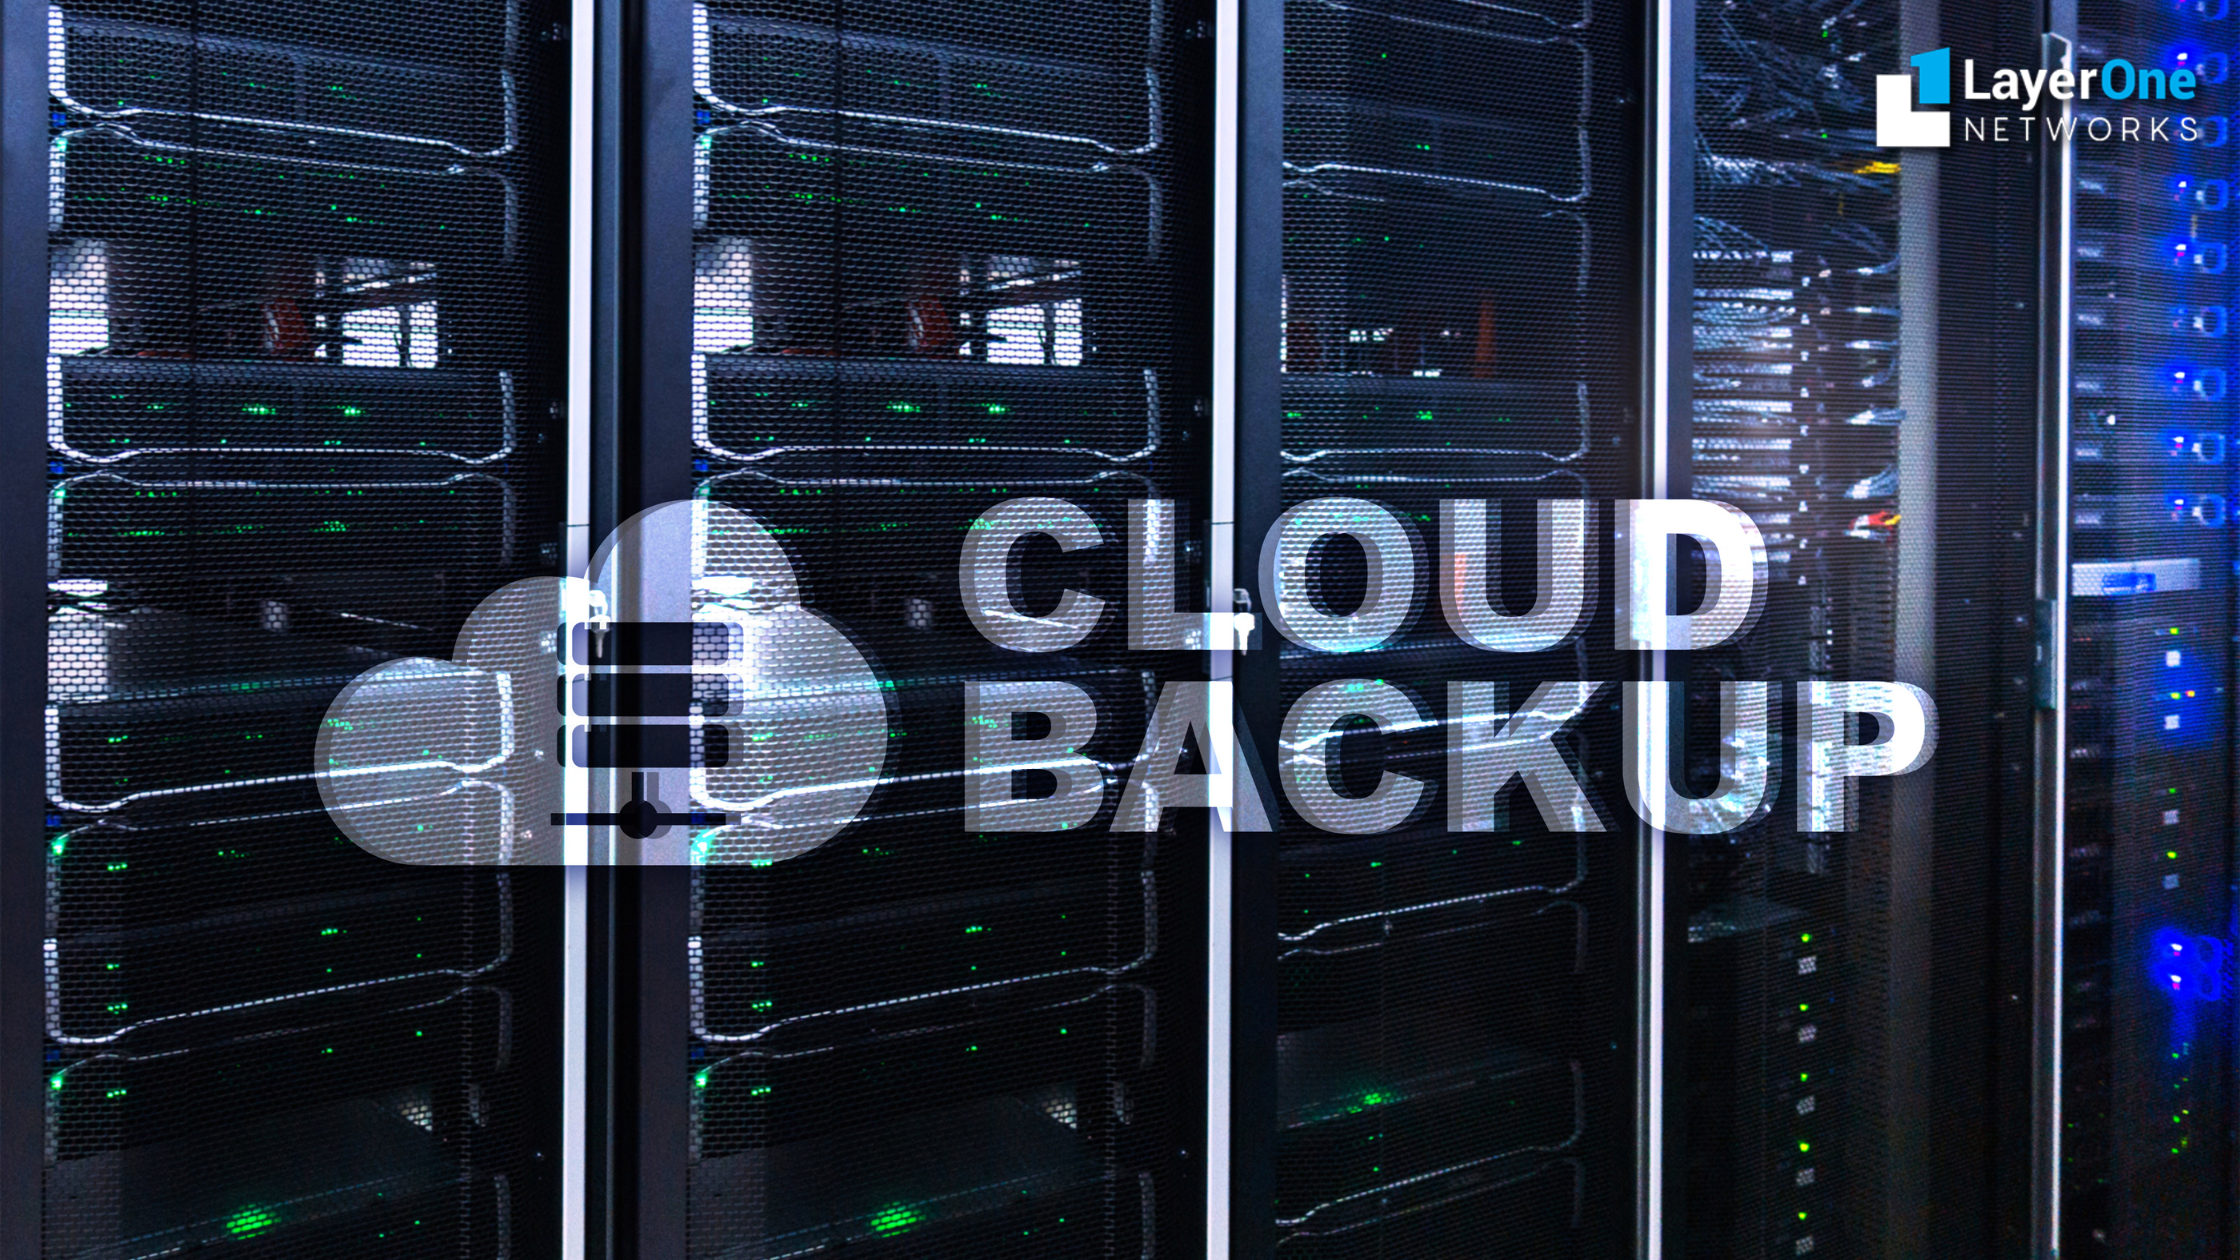 Cloud-Based Backup Services